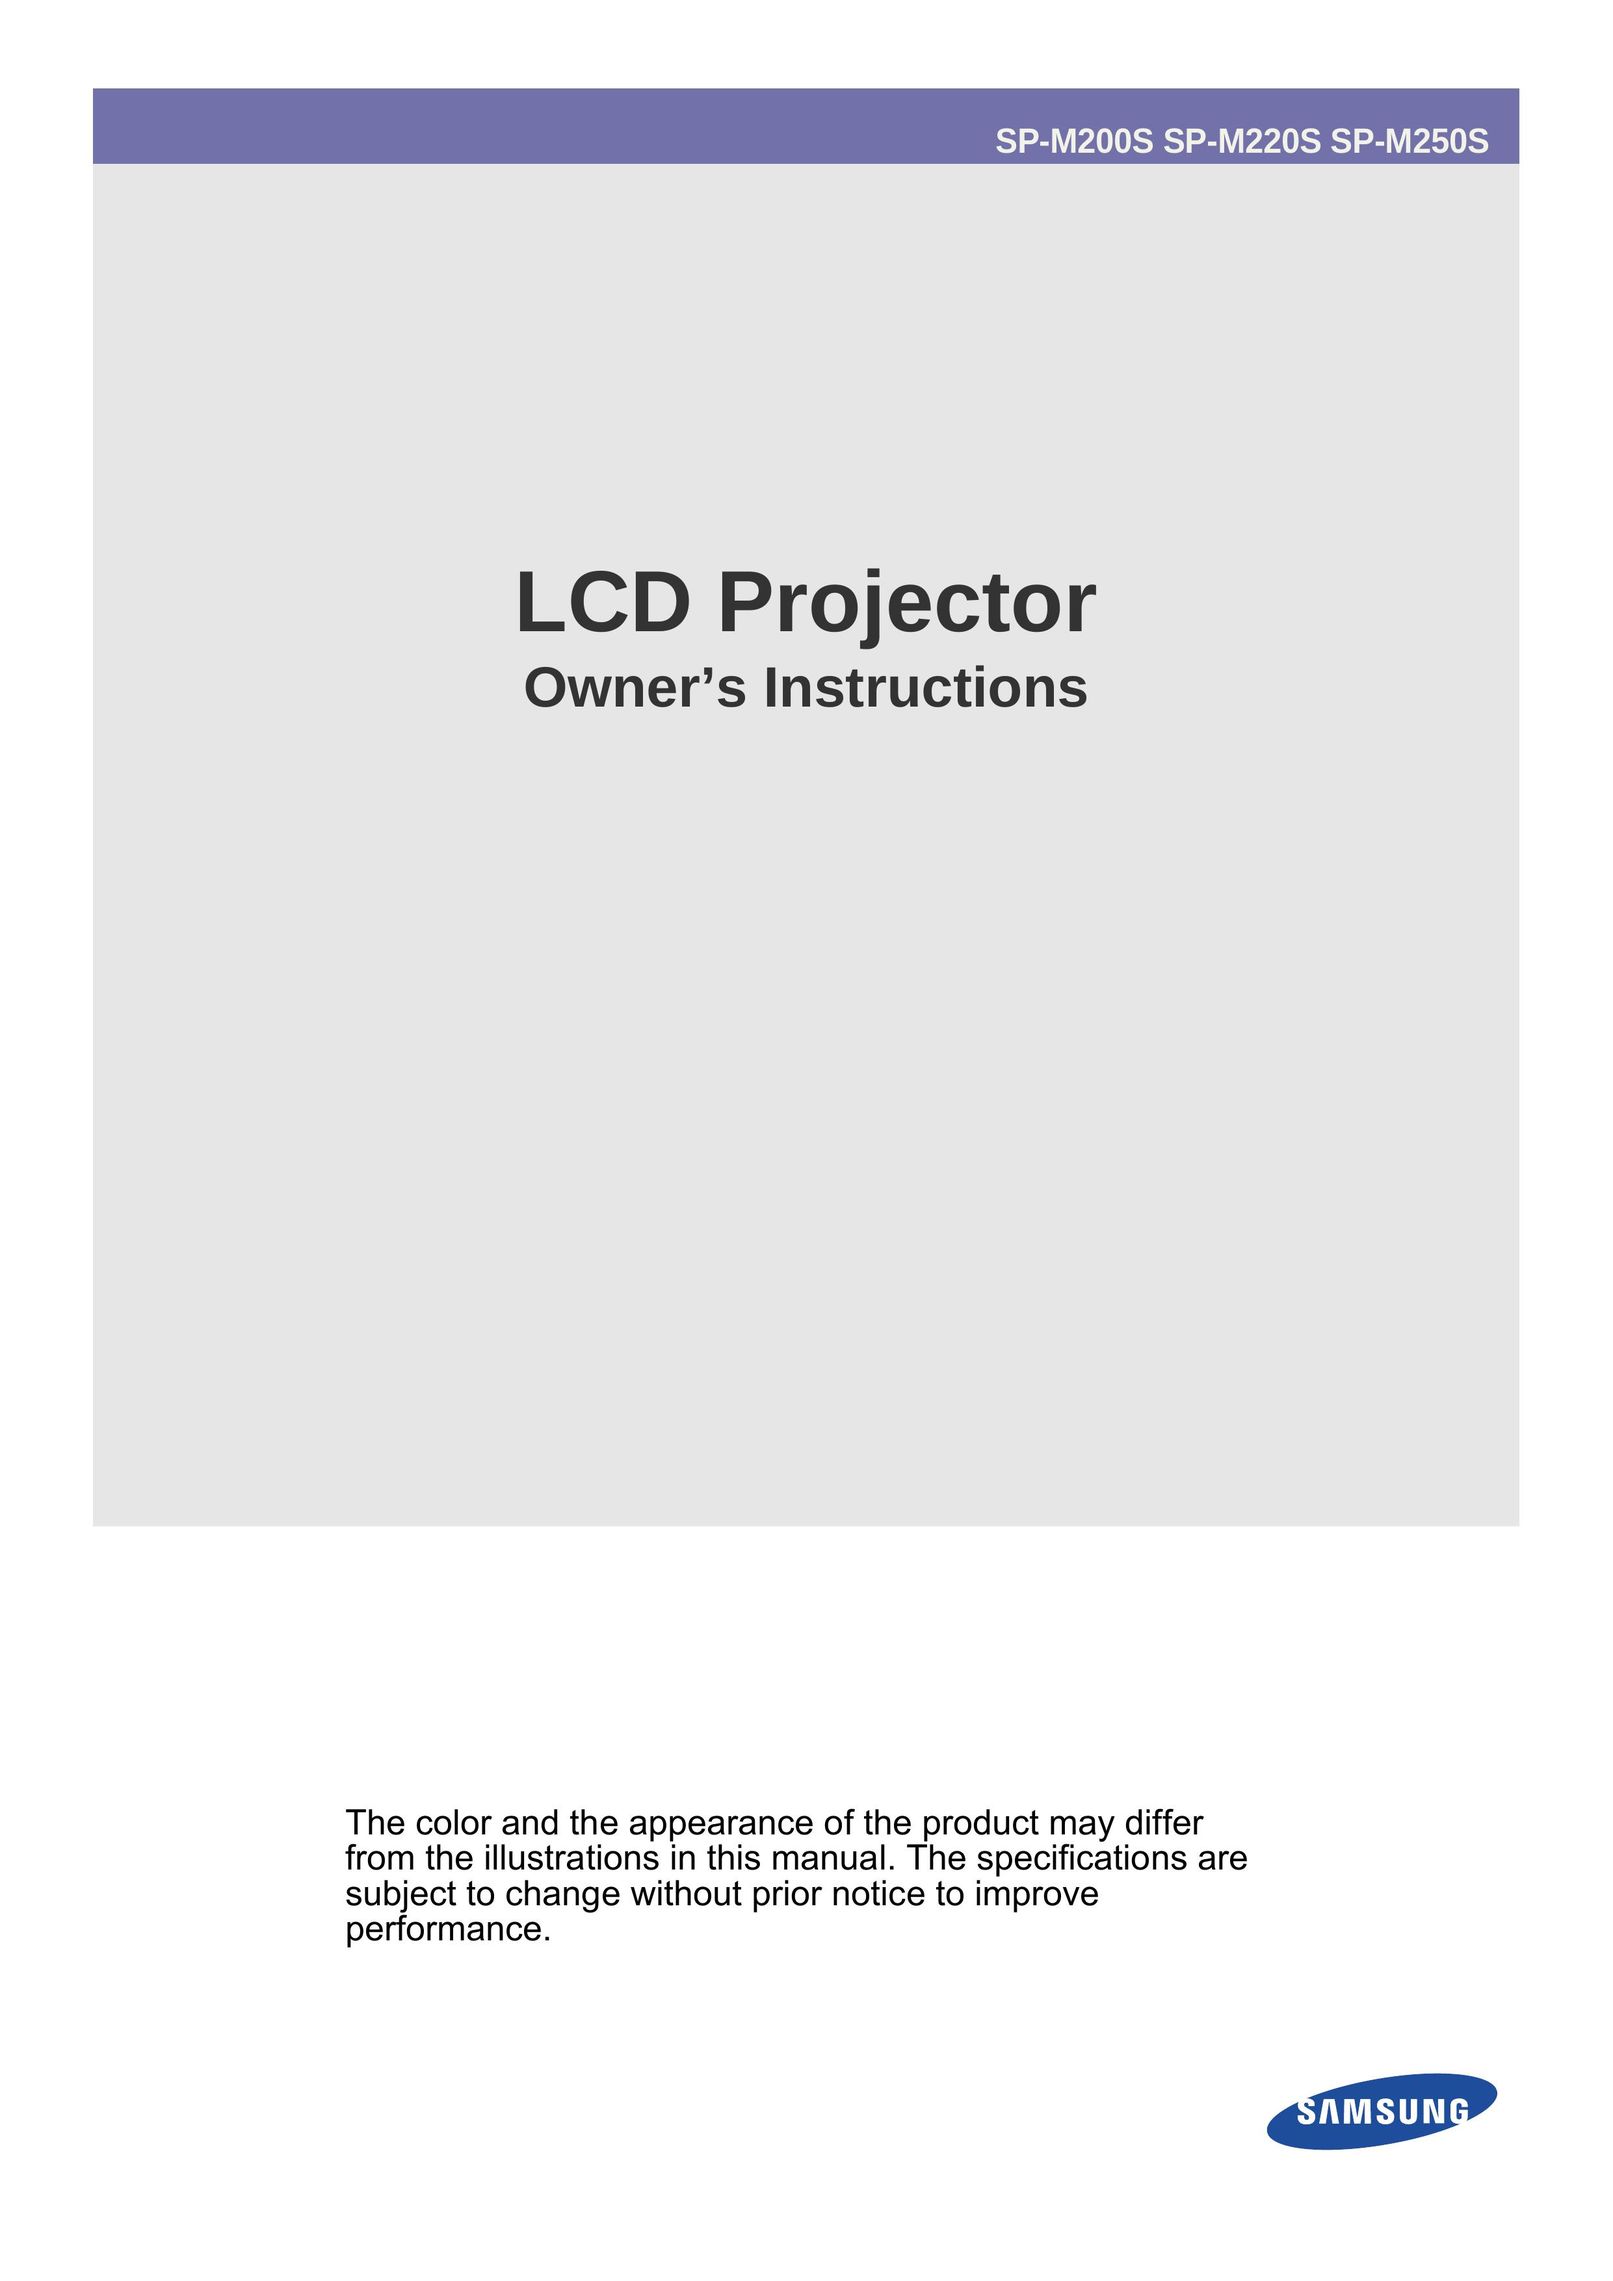 Samsung SP-M250S Projector User Manual